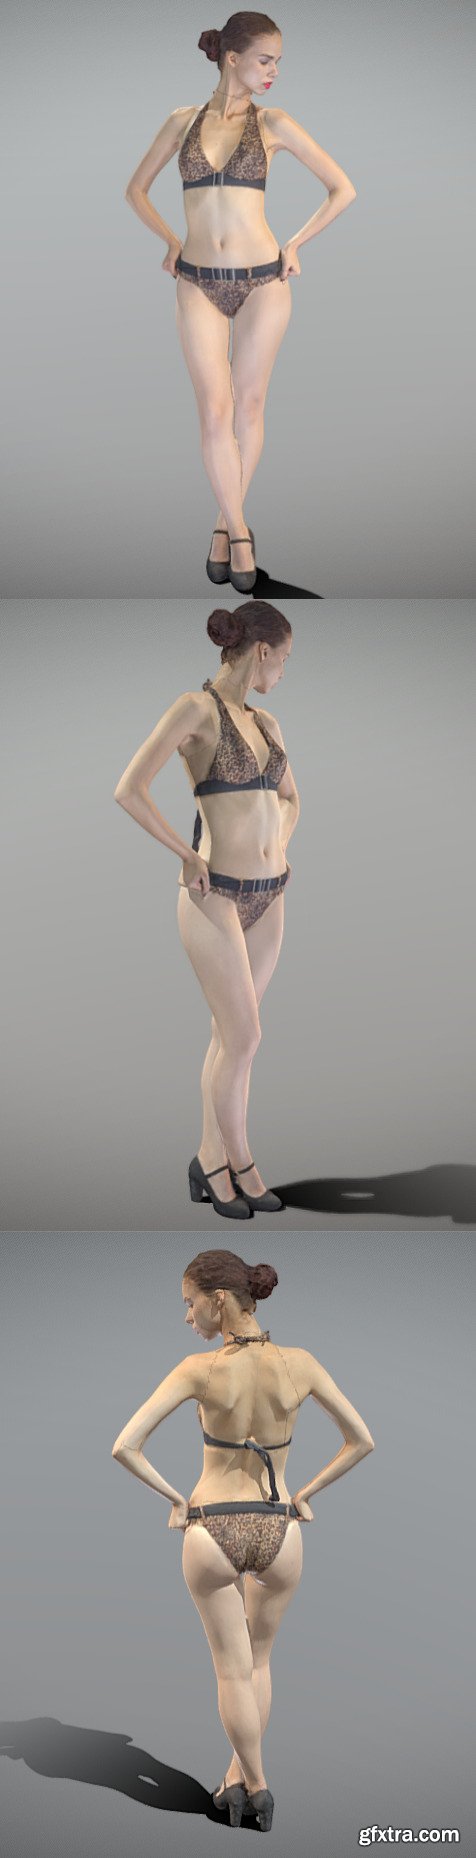 Slim woman in a swimsuit posing 158